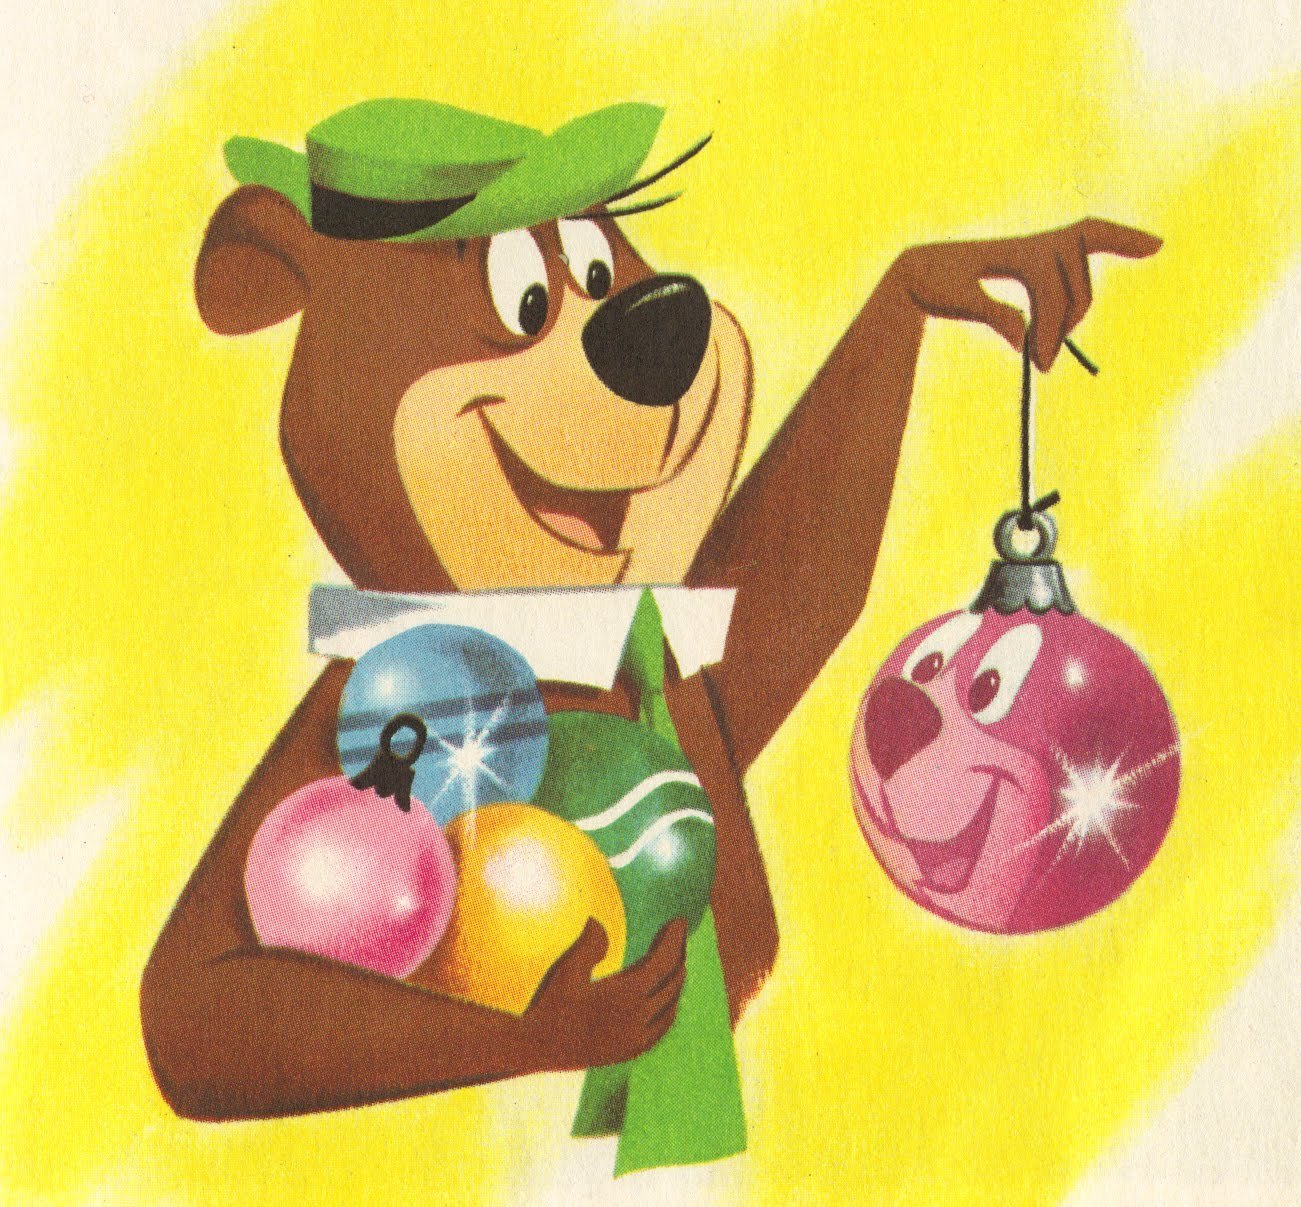 Yogi Bear Image Christmas HD Wallpaper And Background Photos